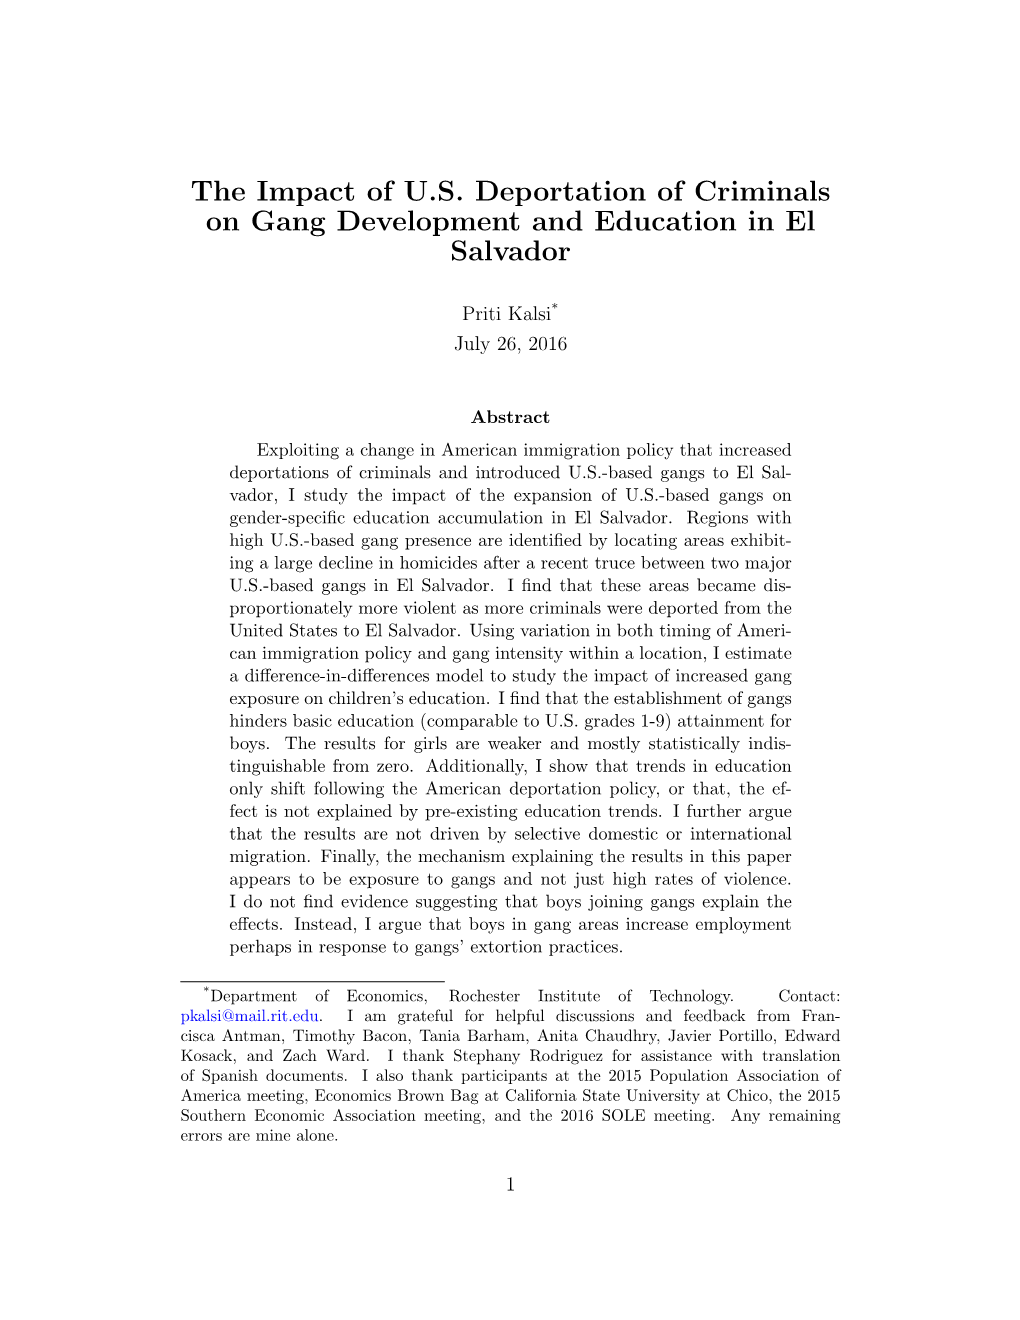 The Impact of U.S. Deportation of Criminals on Gang Development and Education in El Salvador